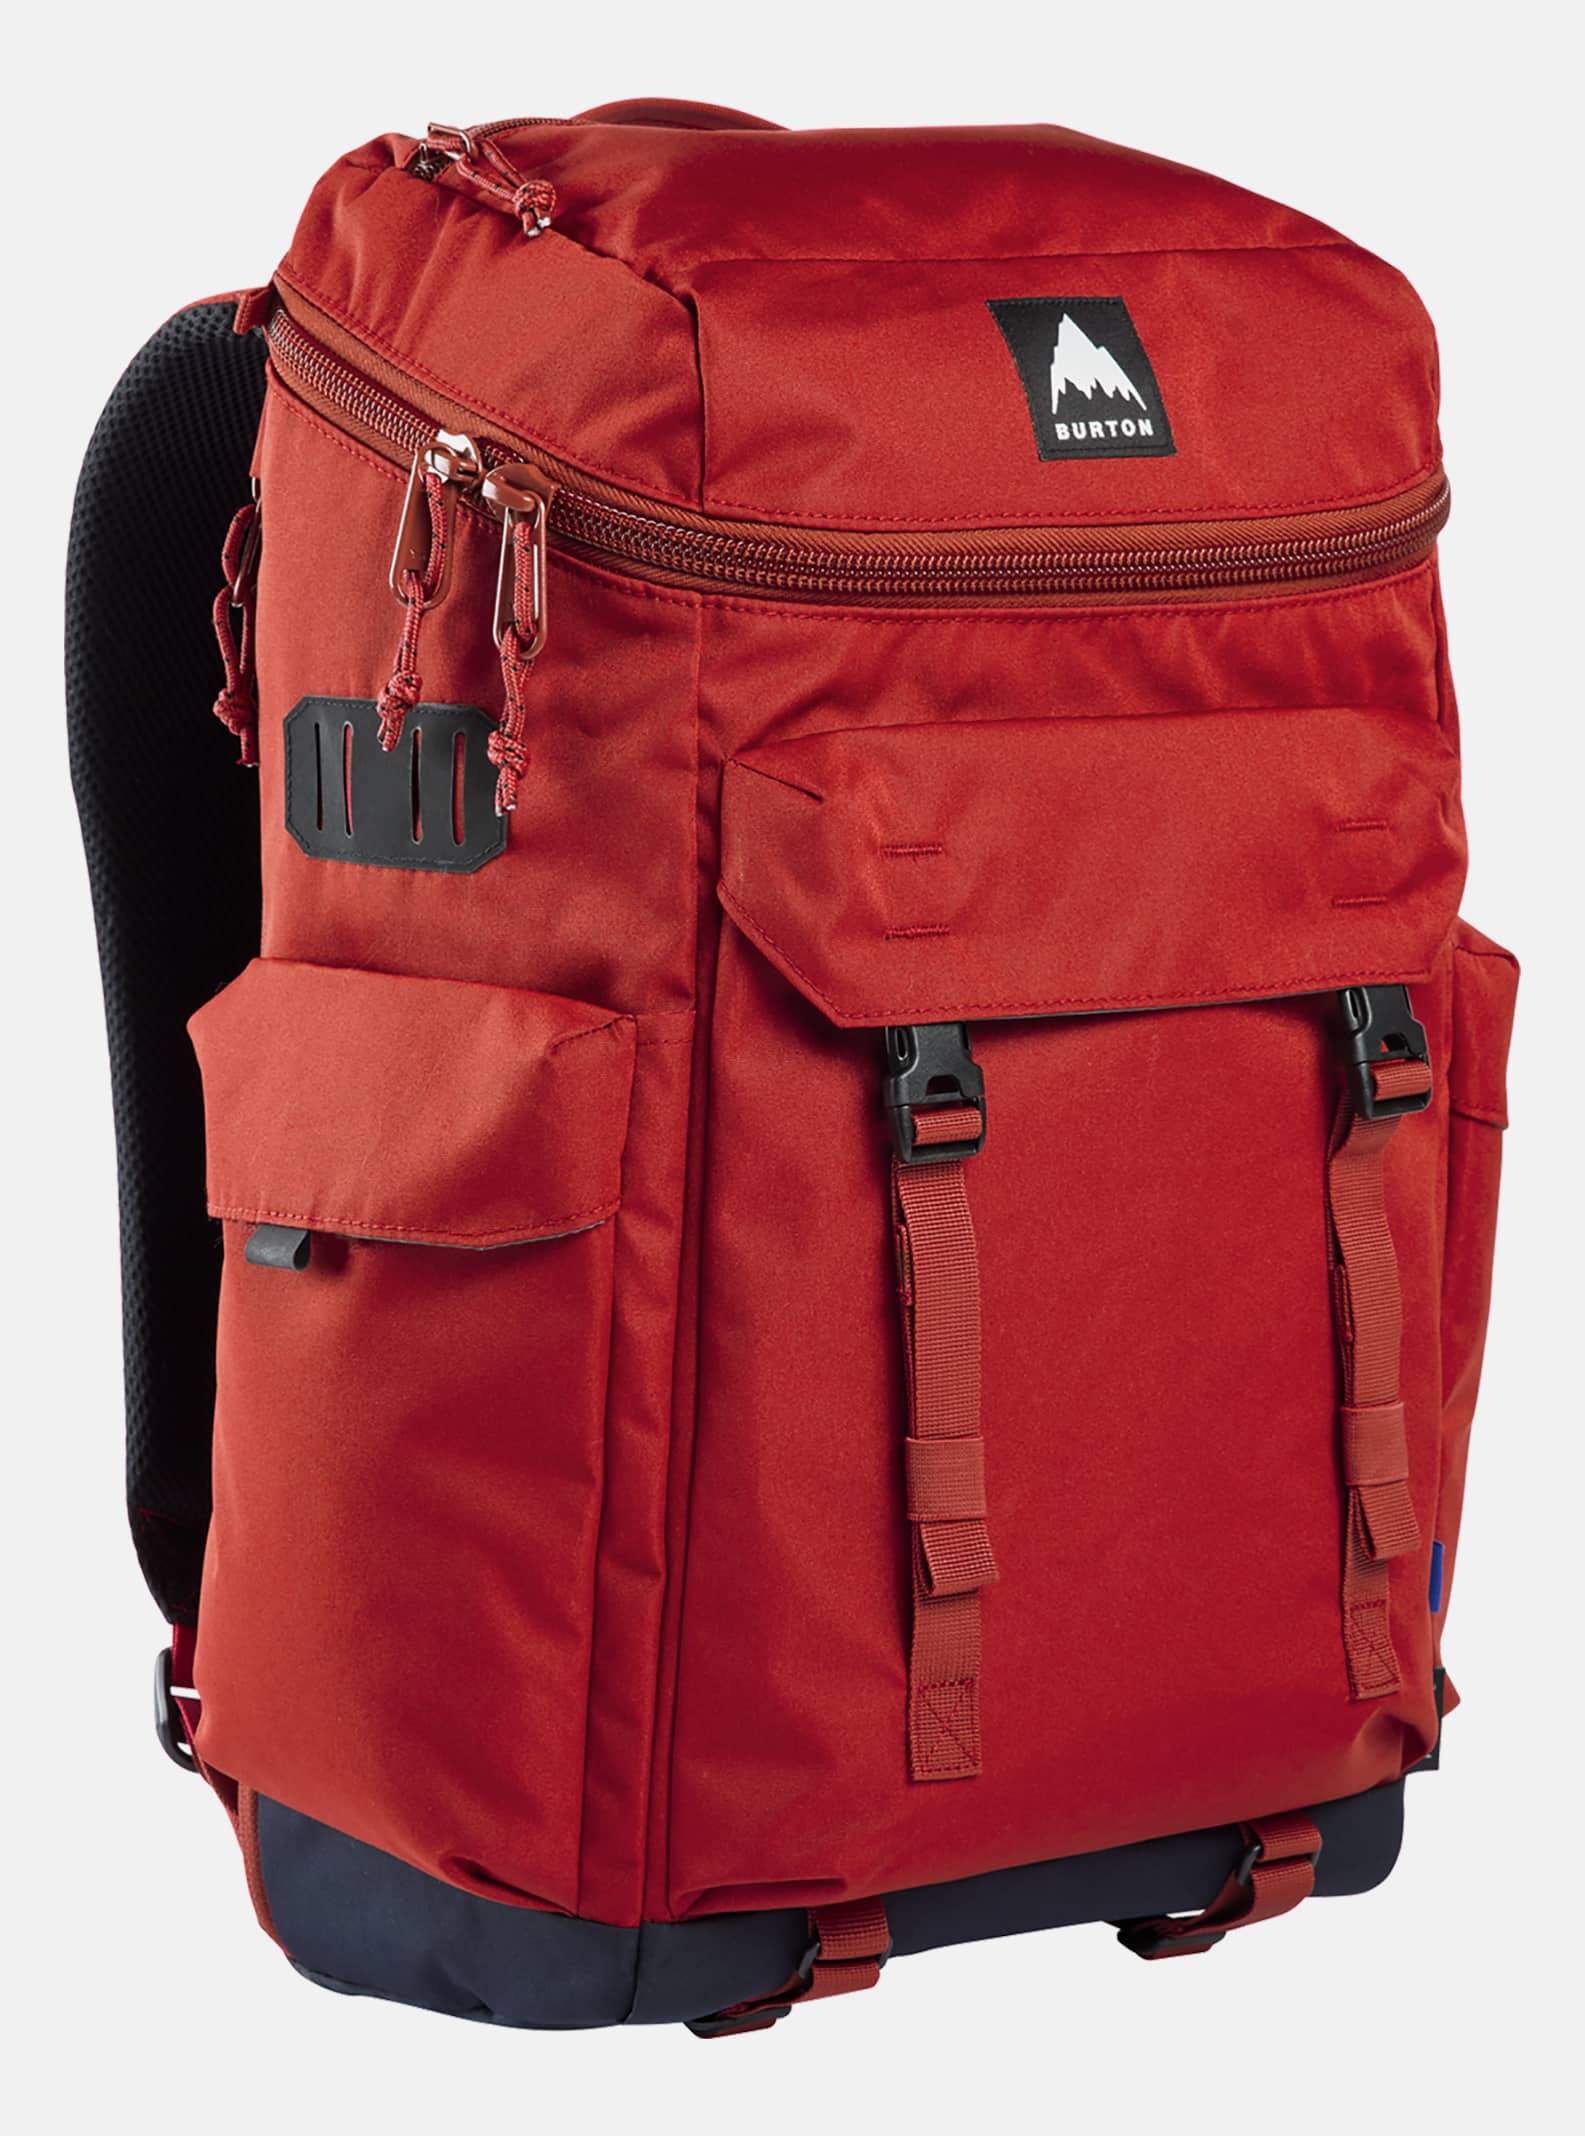 Rucksacks & Backpacks | Snowboard Backpacks | Burton Snowboards GB